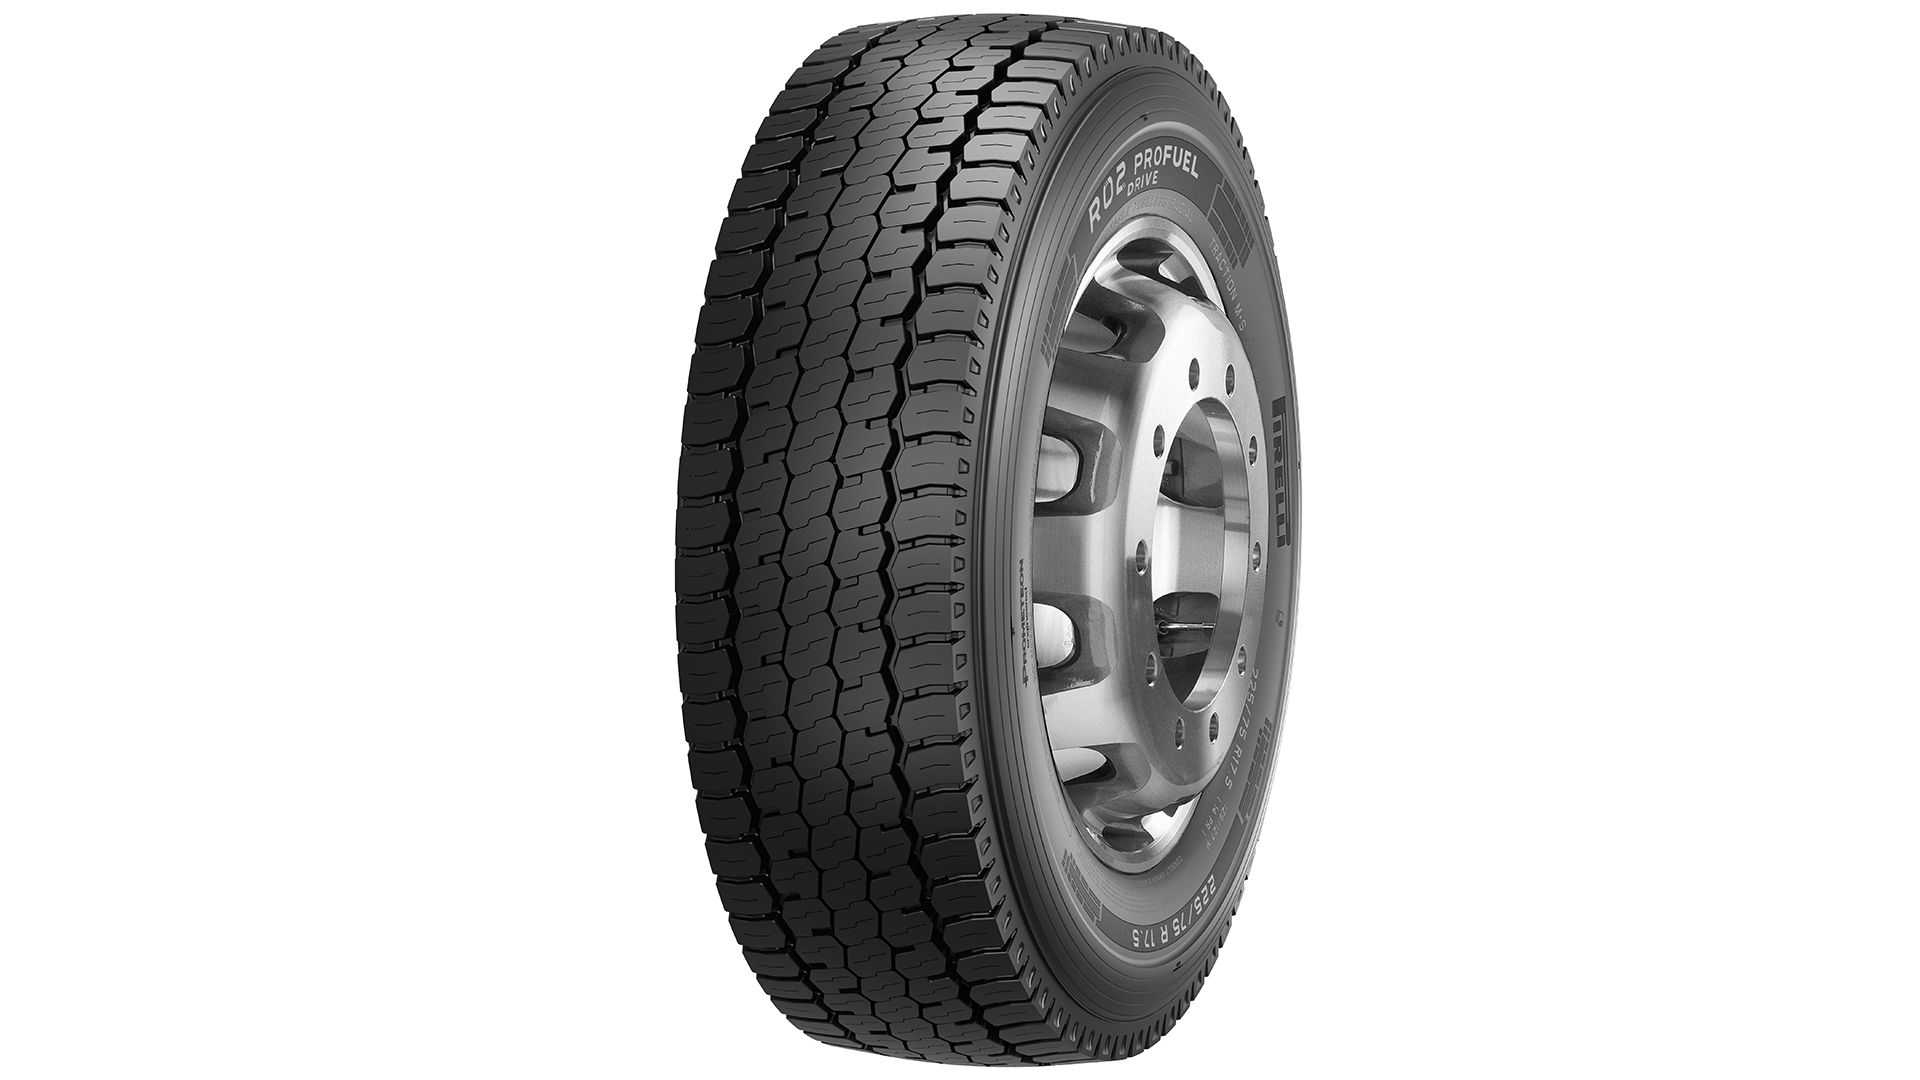 Gomme Nuove Pirelli 225/75 R17.5 129/127M R02 PROFUEL D M+S (8.00mm) pneumatici nuovi Estivo